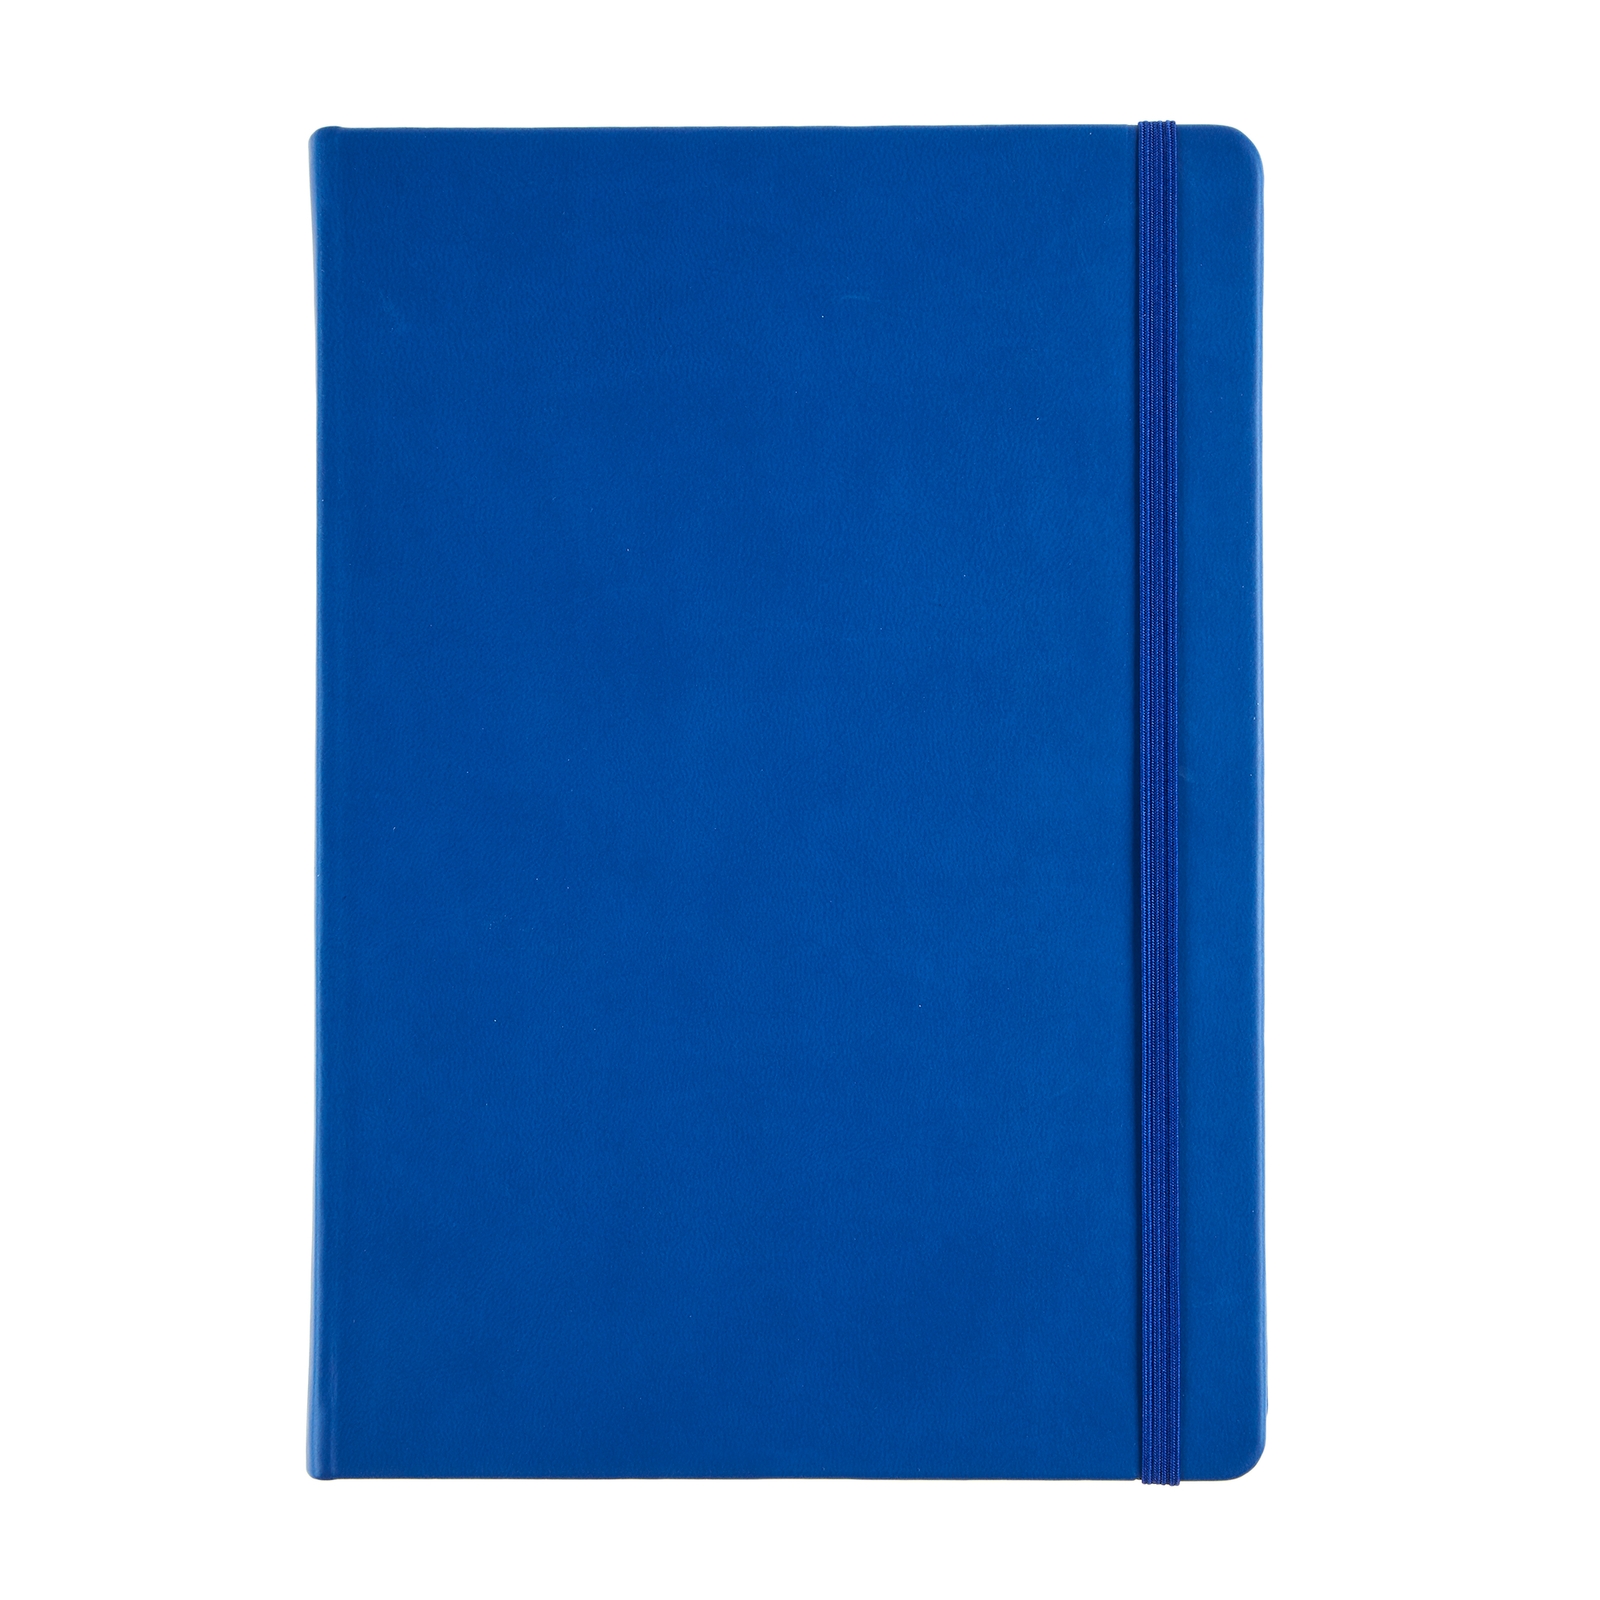 Collins A5 Hardback Notebook - Royal Blue